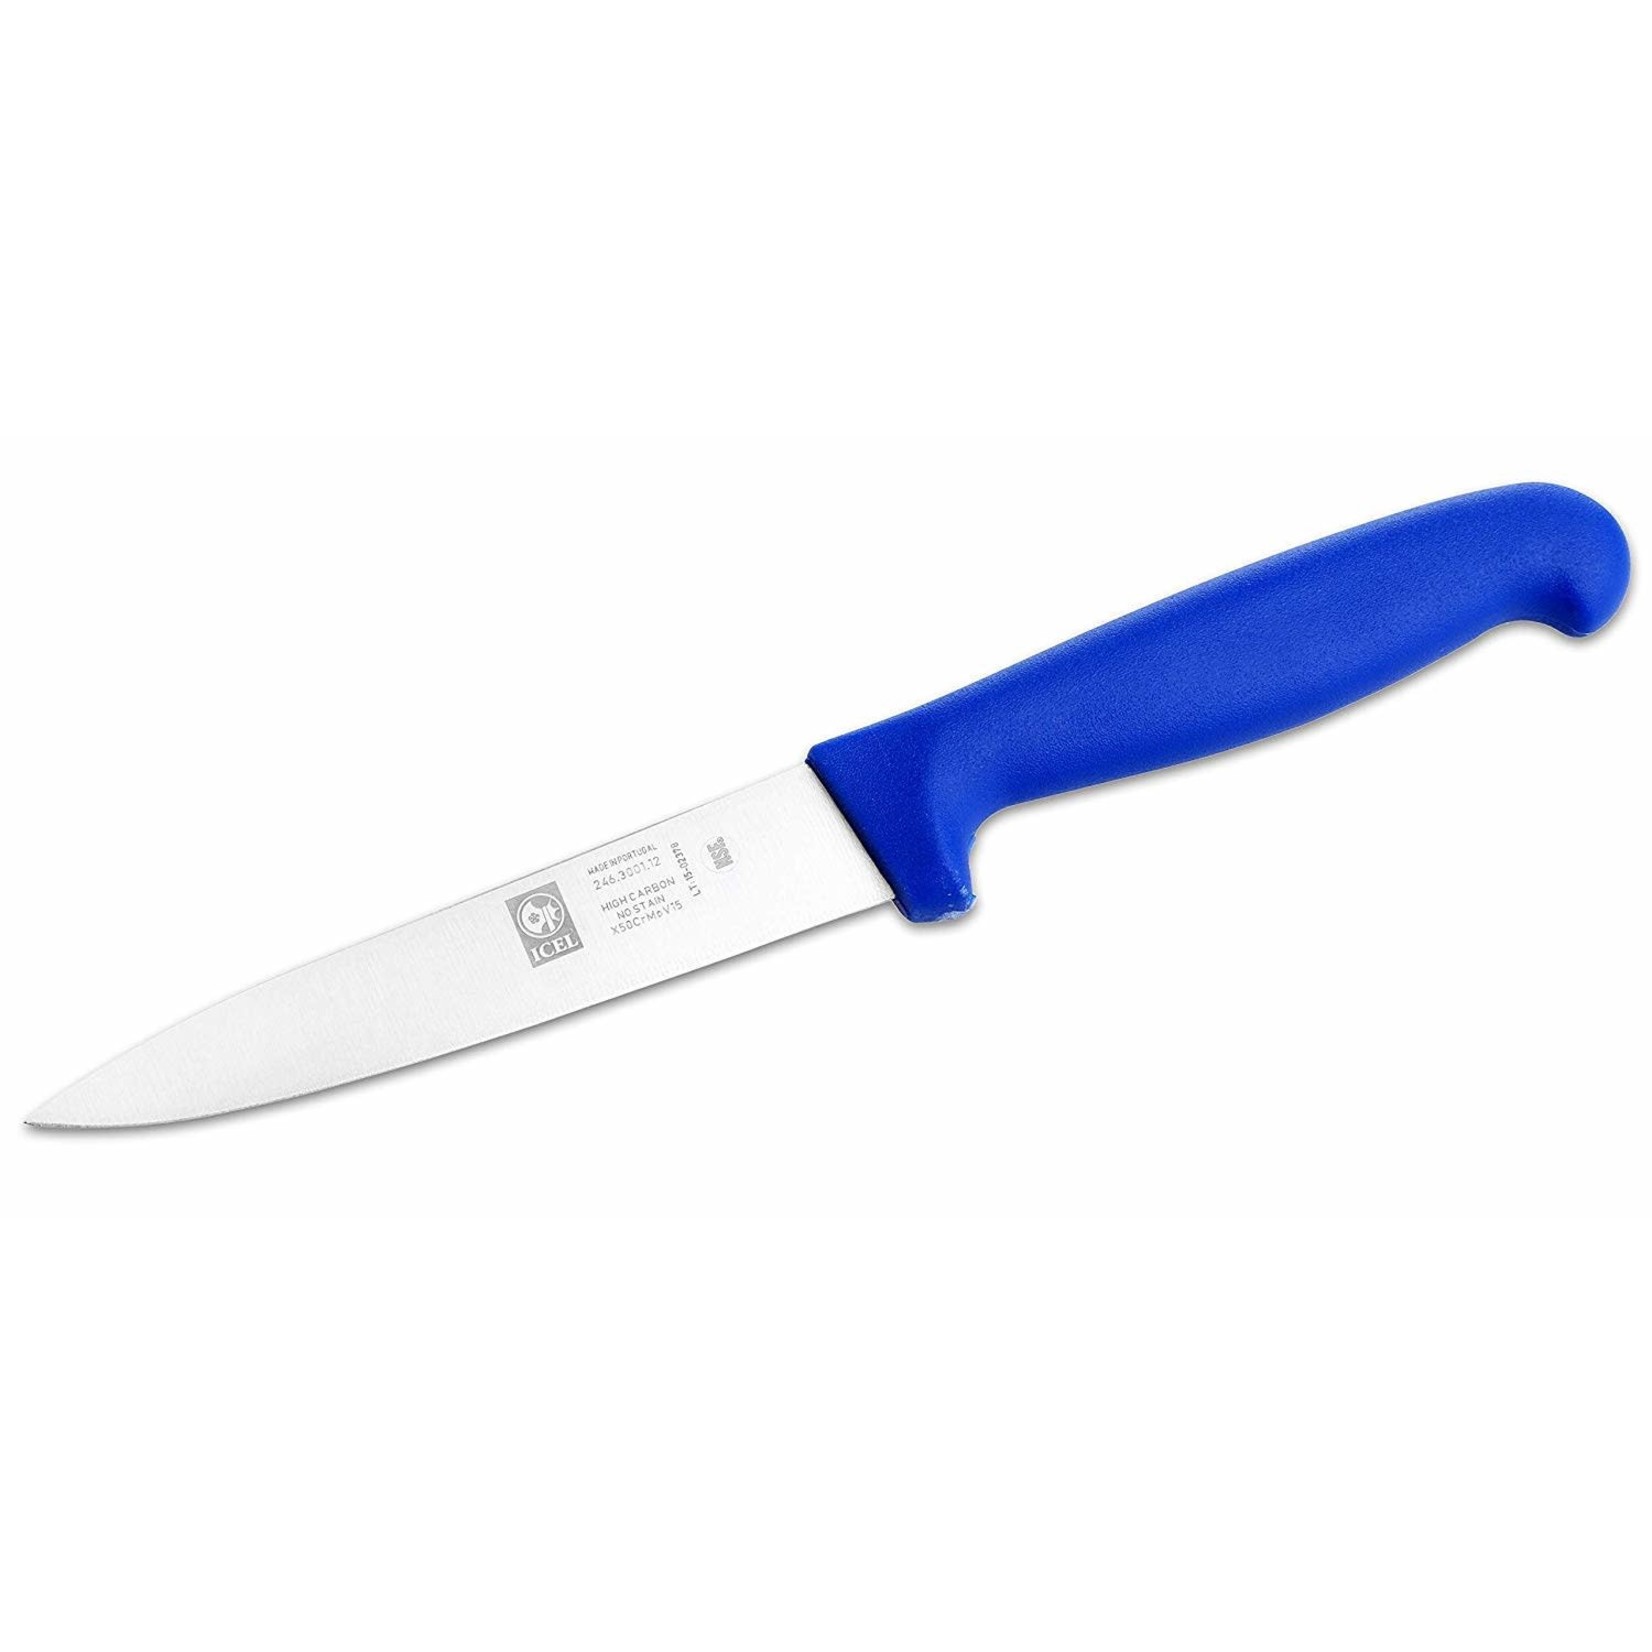 TWS 5" blue handle victorinox knife